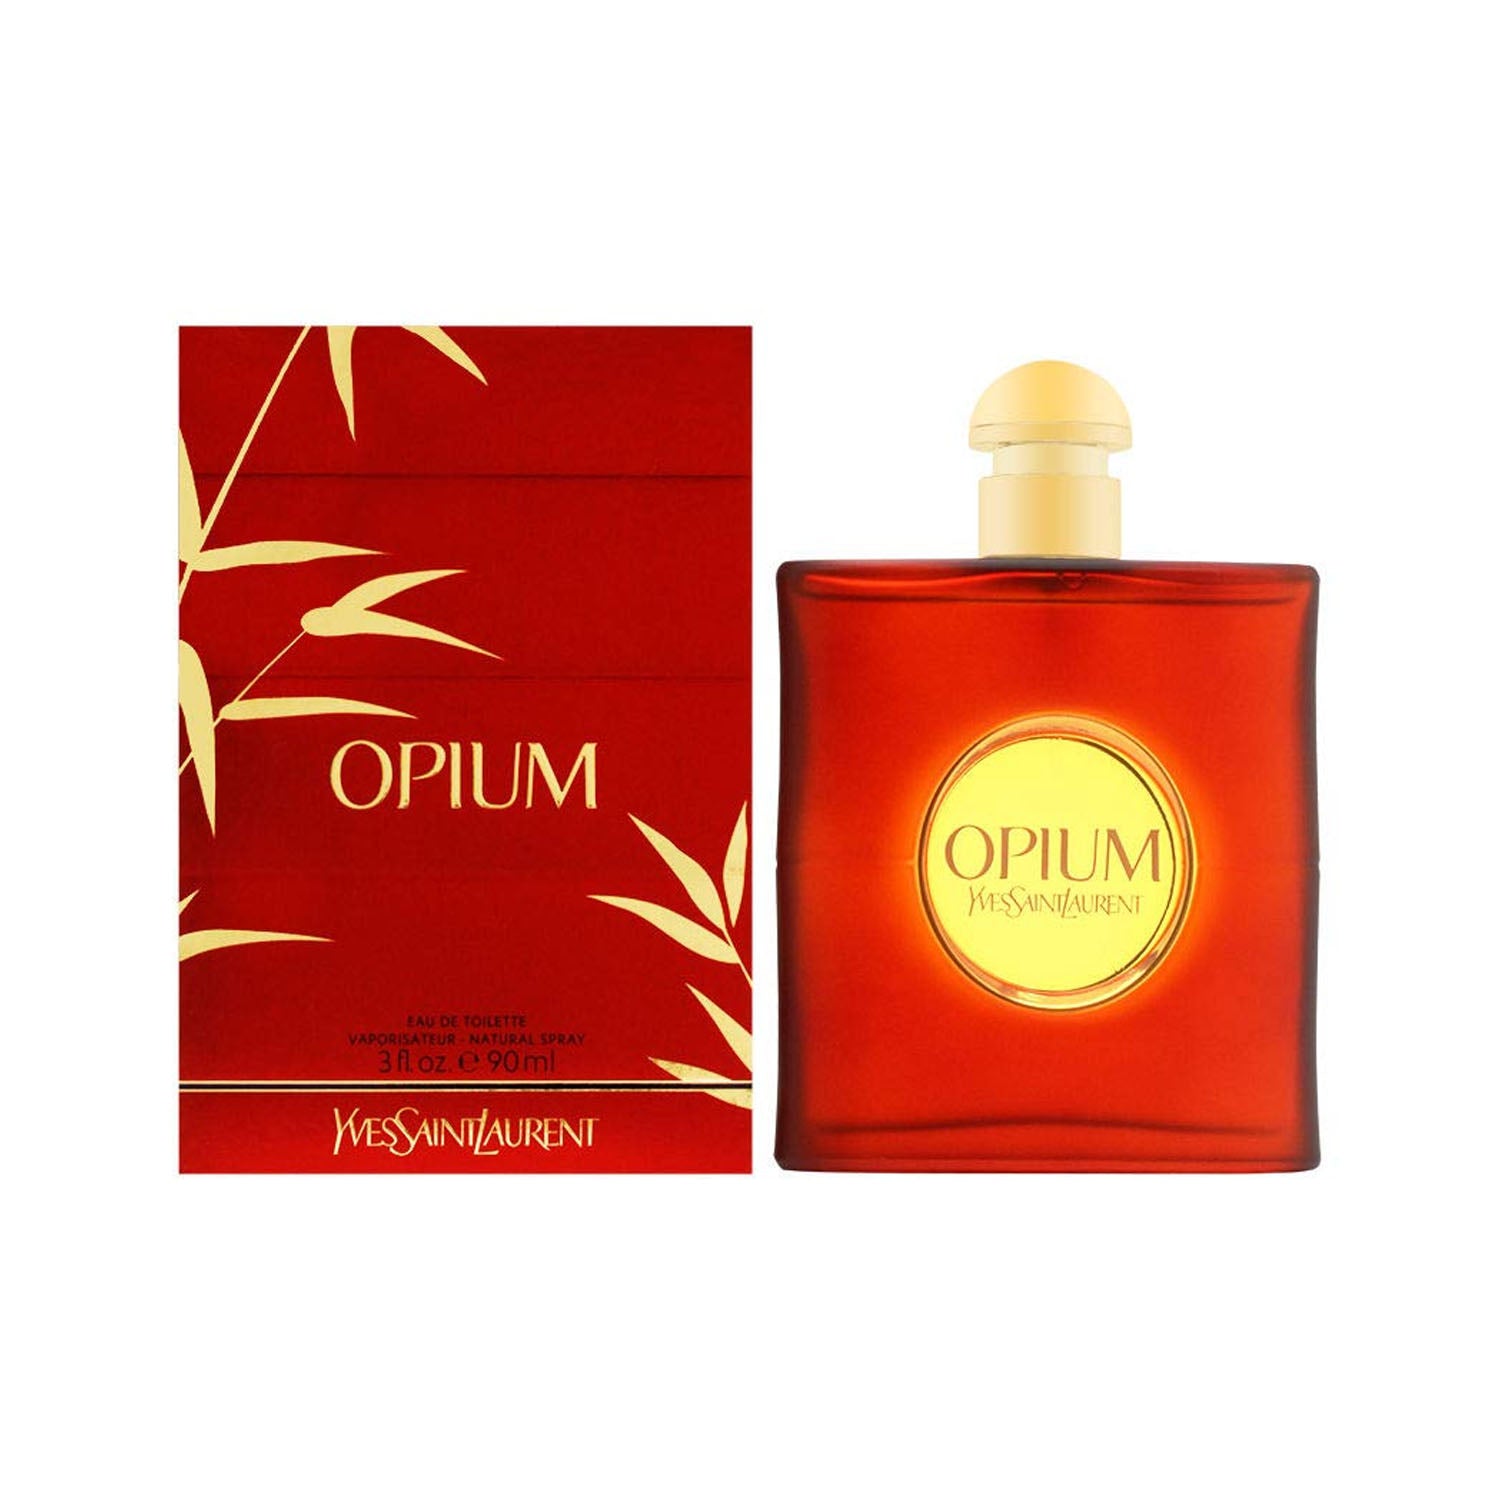 Yves Saint Laurent Opium 90 ml Eau De Toilette Spray for Women